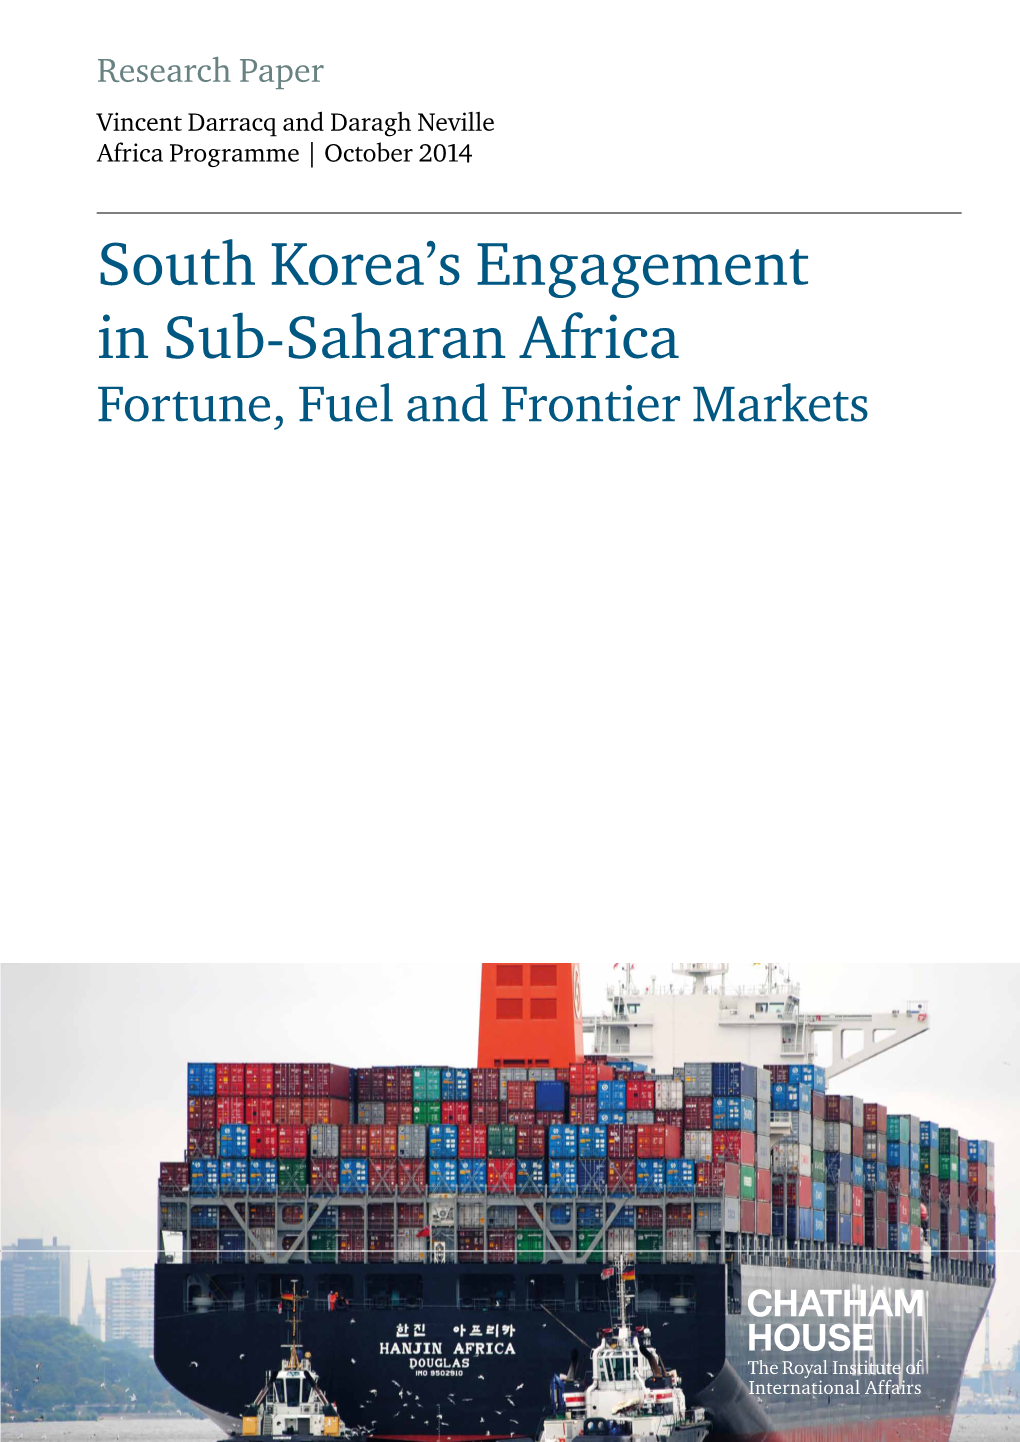 South Korea's Engagement in Sub-Saharan Africa